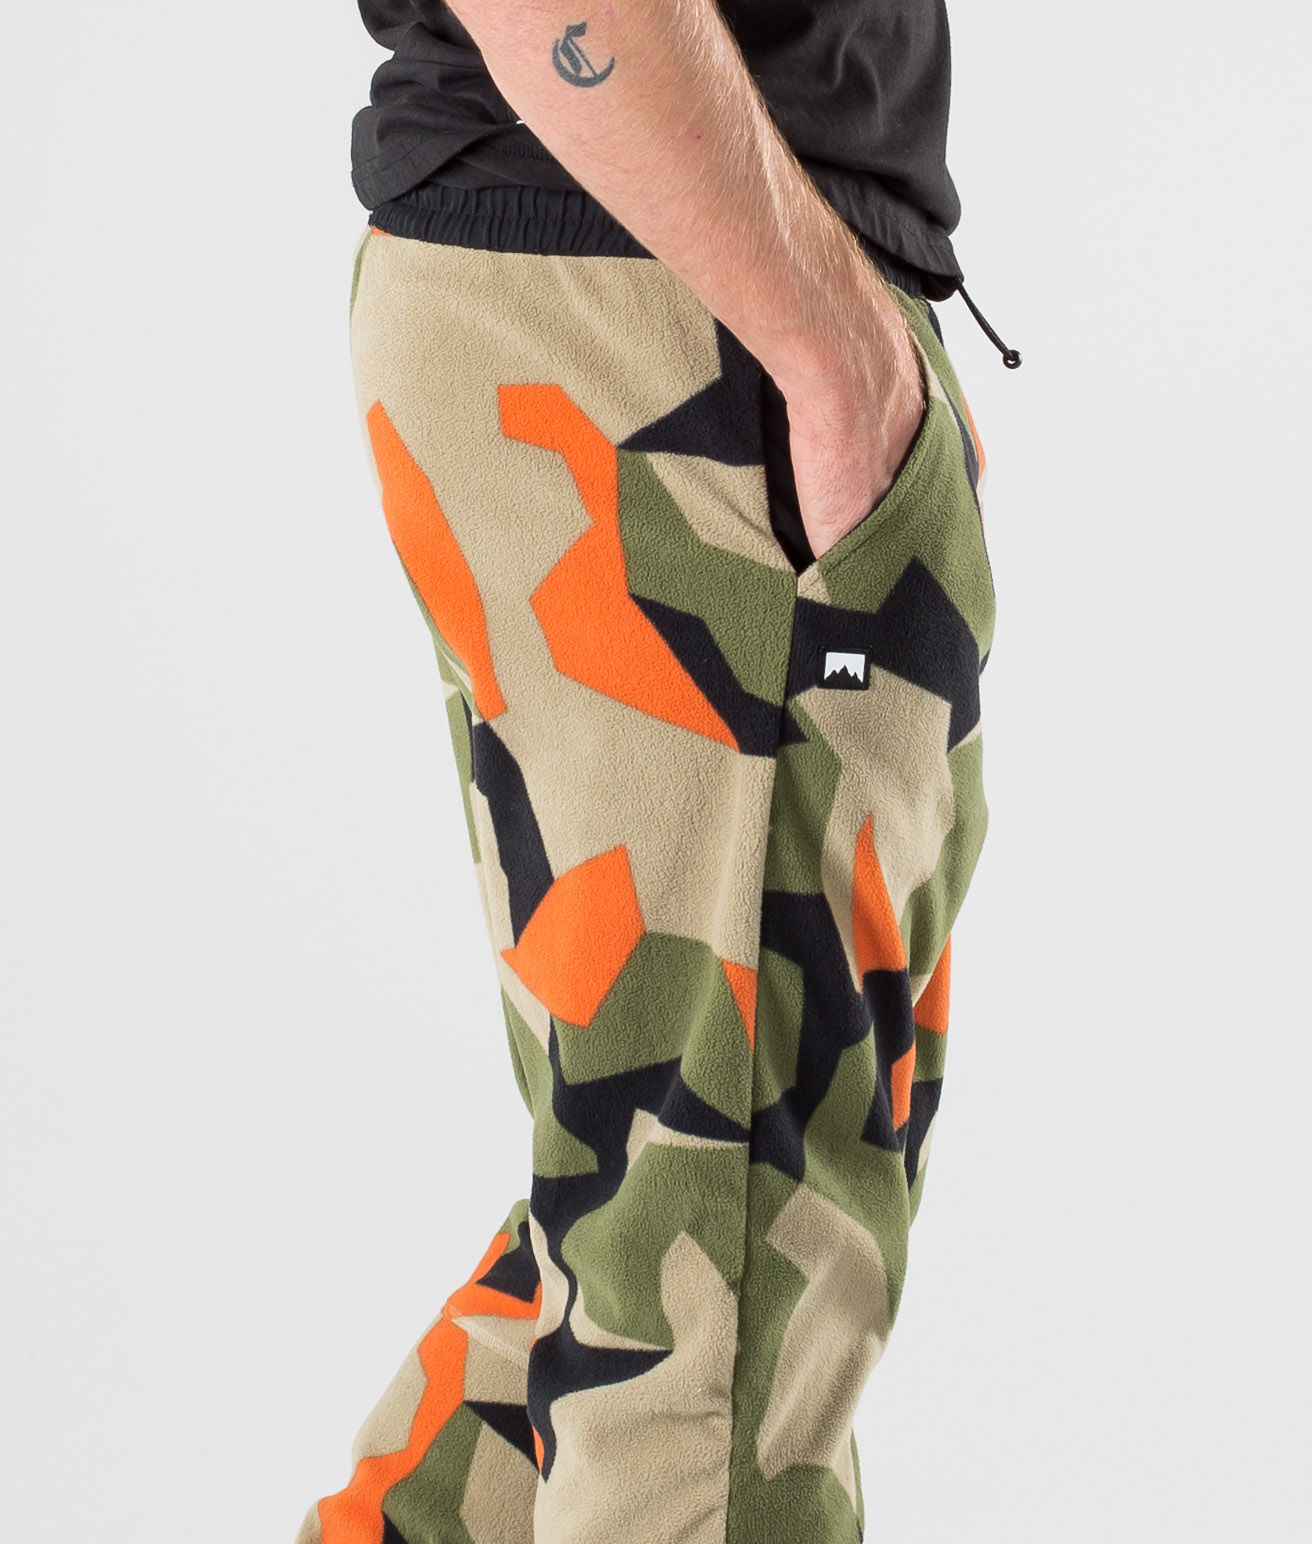 Fashion Nova  Pants  Jumpsuits  A Orange And Black Camouflage Pants Not  Brand New  Poshmark